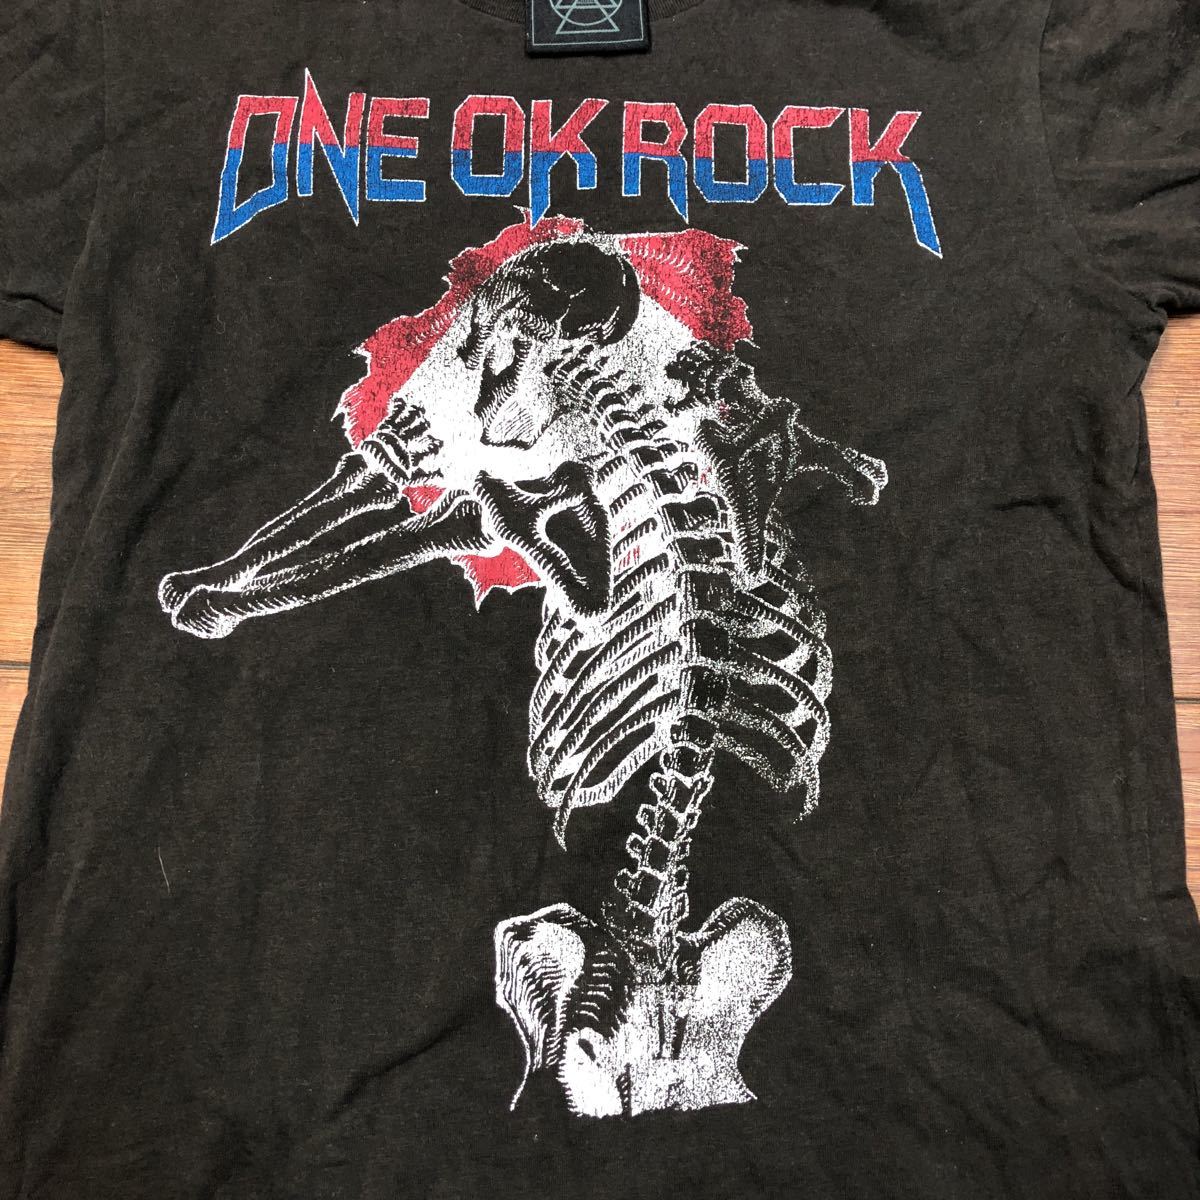 ONE OK ROCK ワンオクロック Tシャツ 黒 S 2016 SPECIAL LIVE IN NAGISAEN taka バンドtシャツ e1